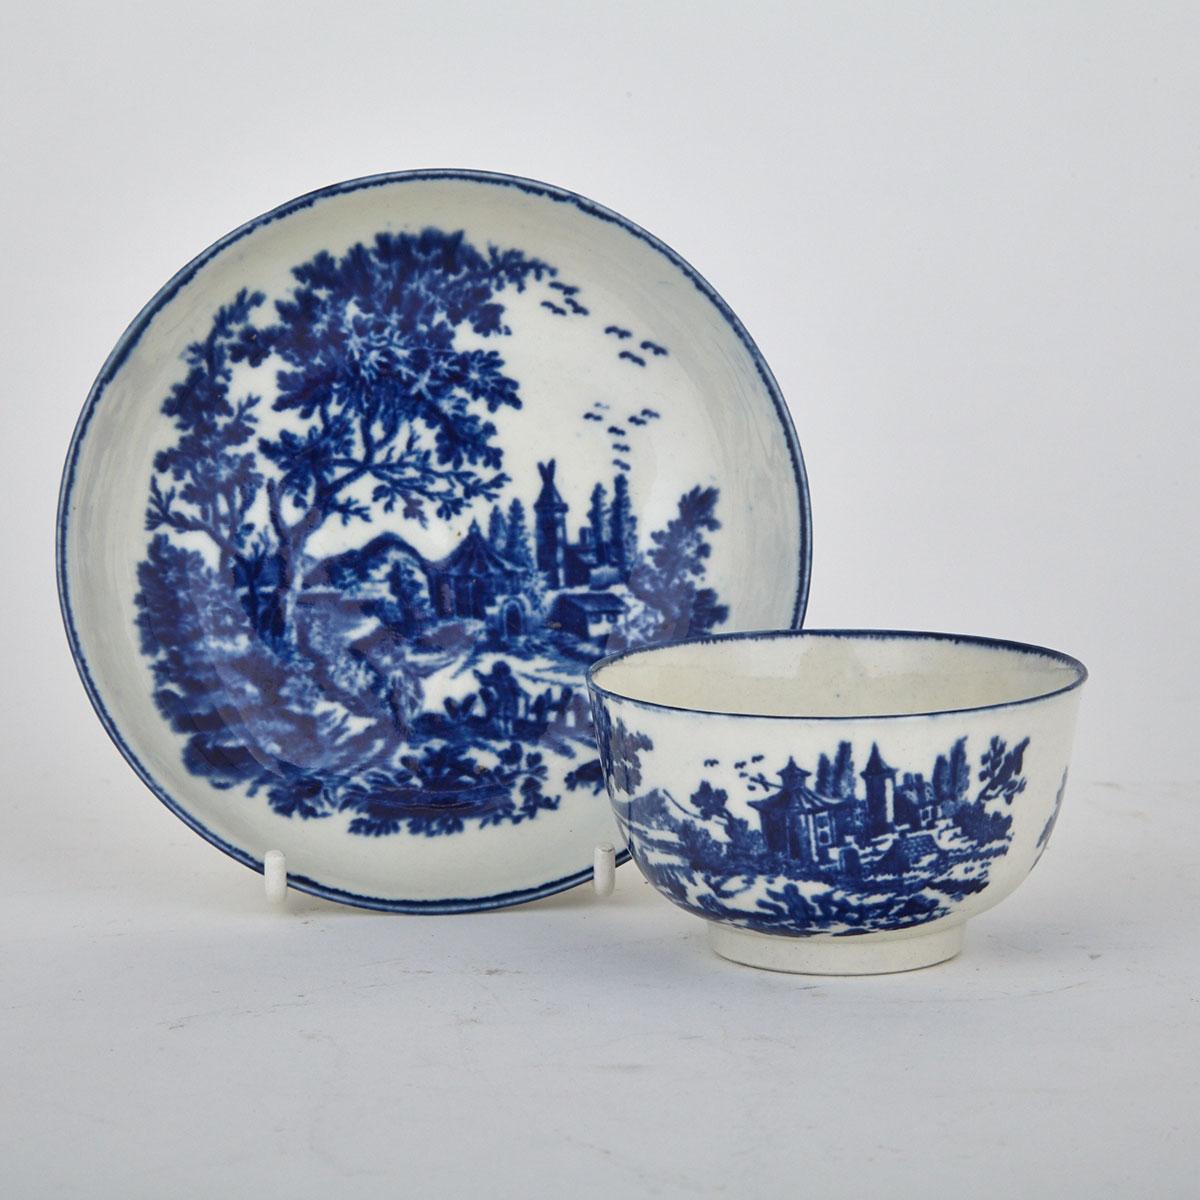 Worcester ‘European Landscape’ Tea Bowl and Saucer, c.1775-85